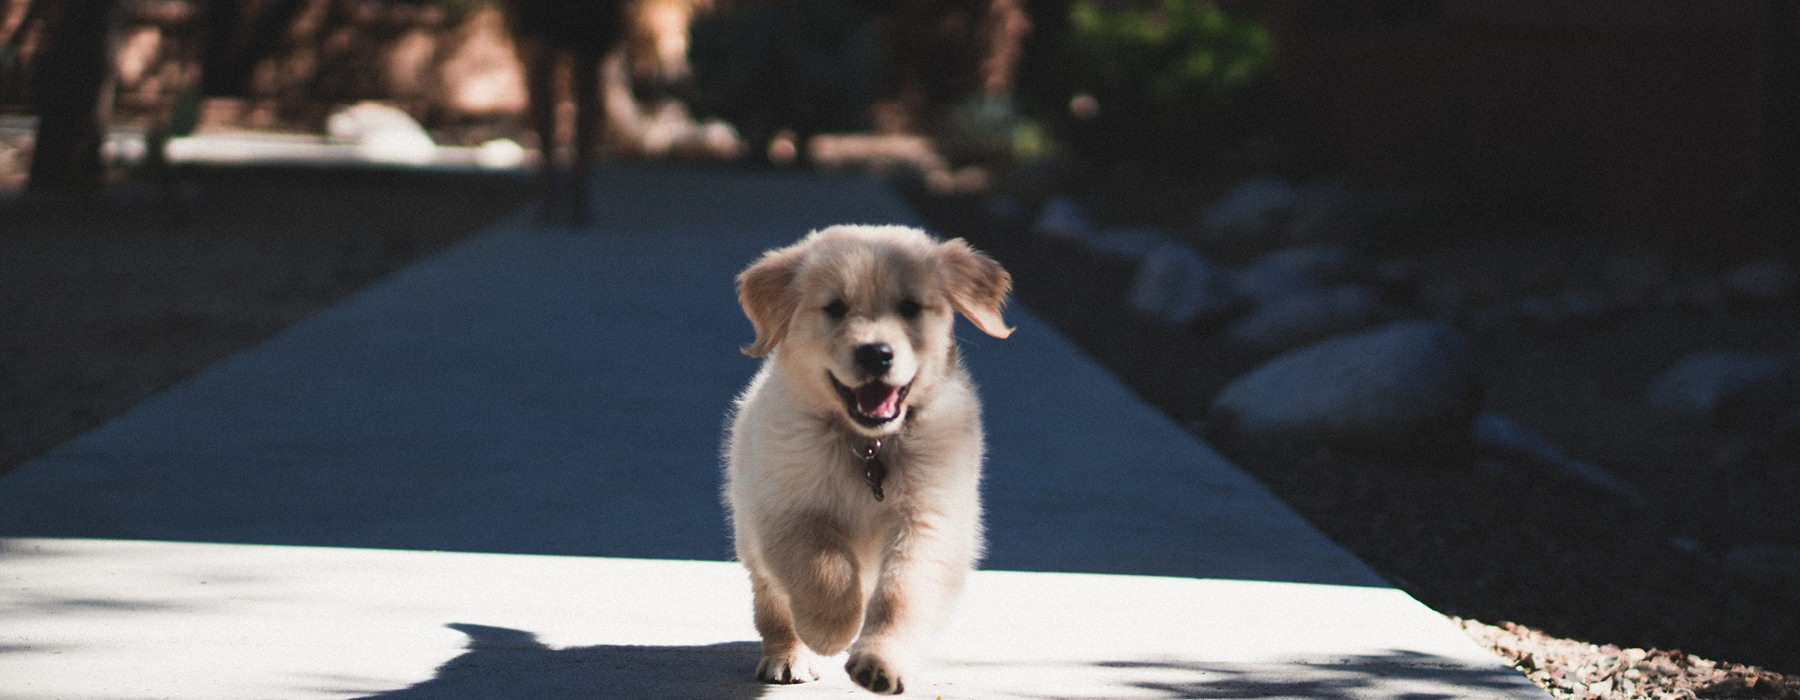 puppy running ahead of owner on a park sidewalk